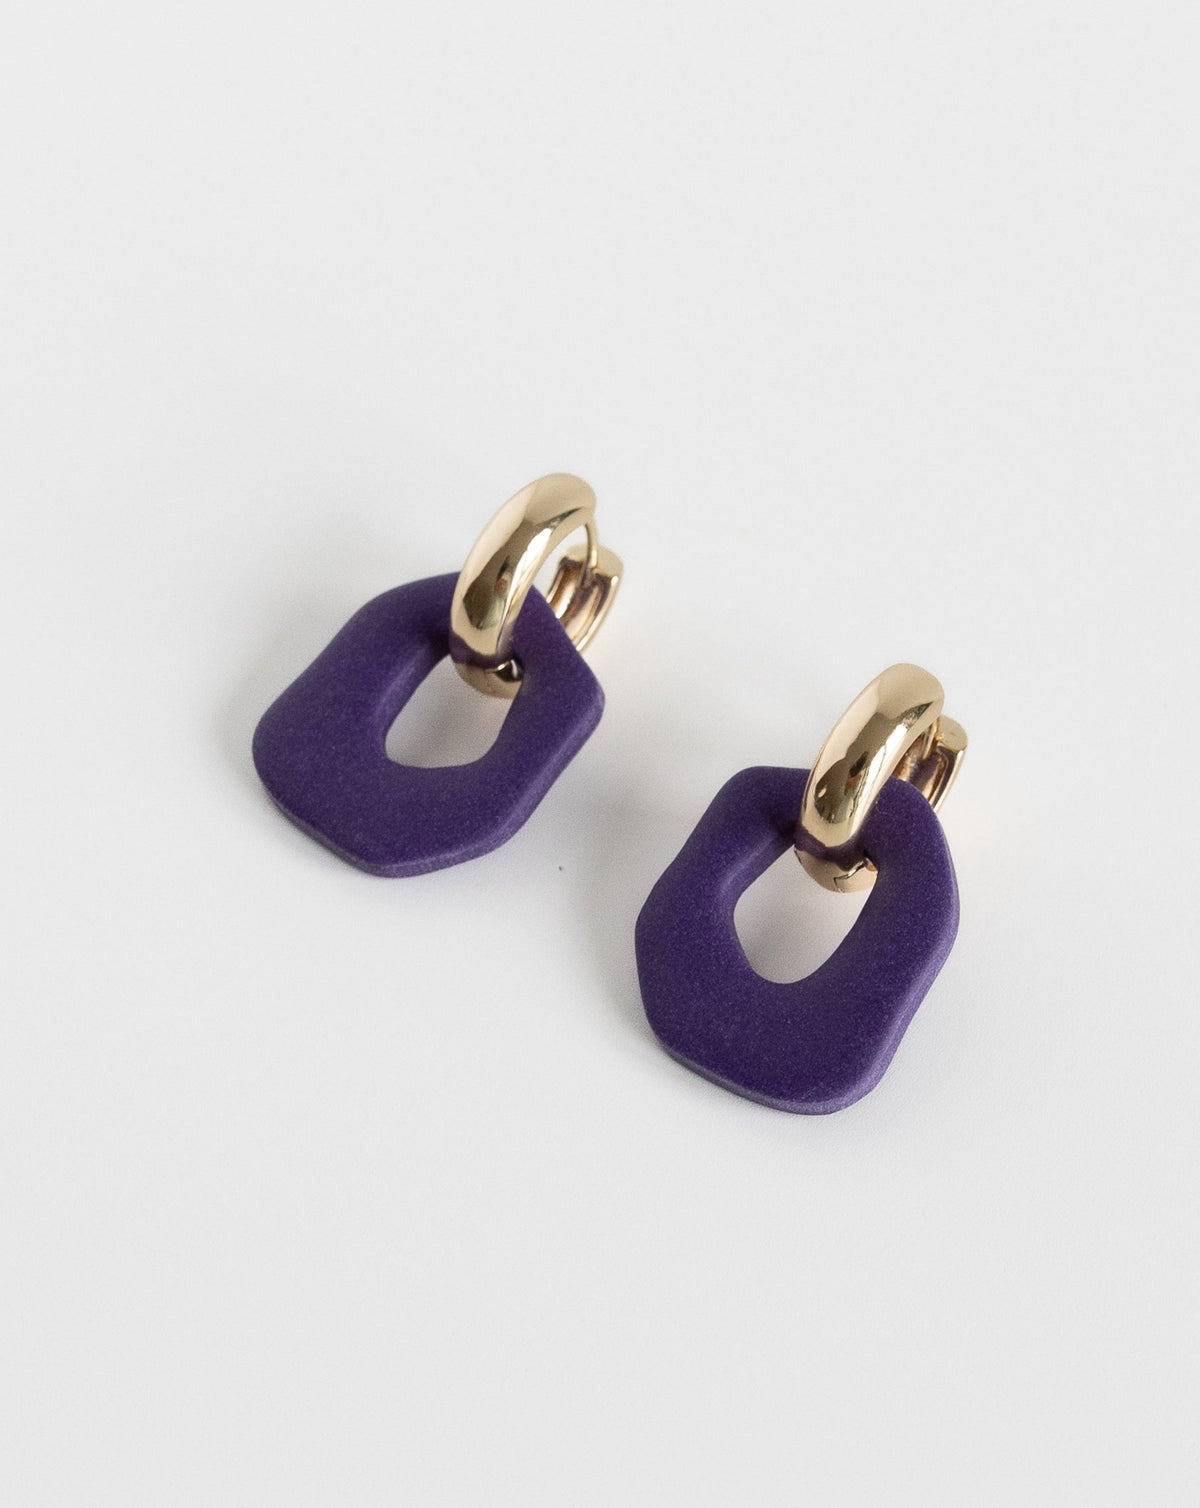 Darien earrings in Purple color with gold hoops, side view